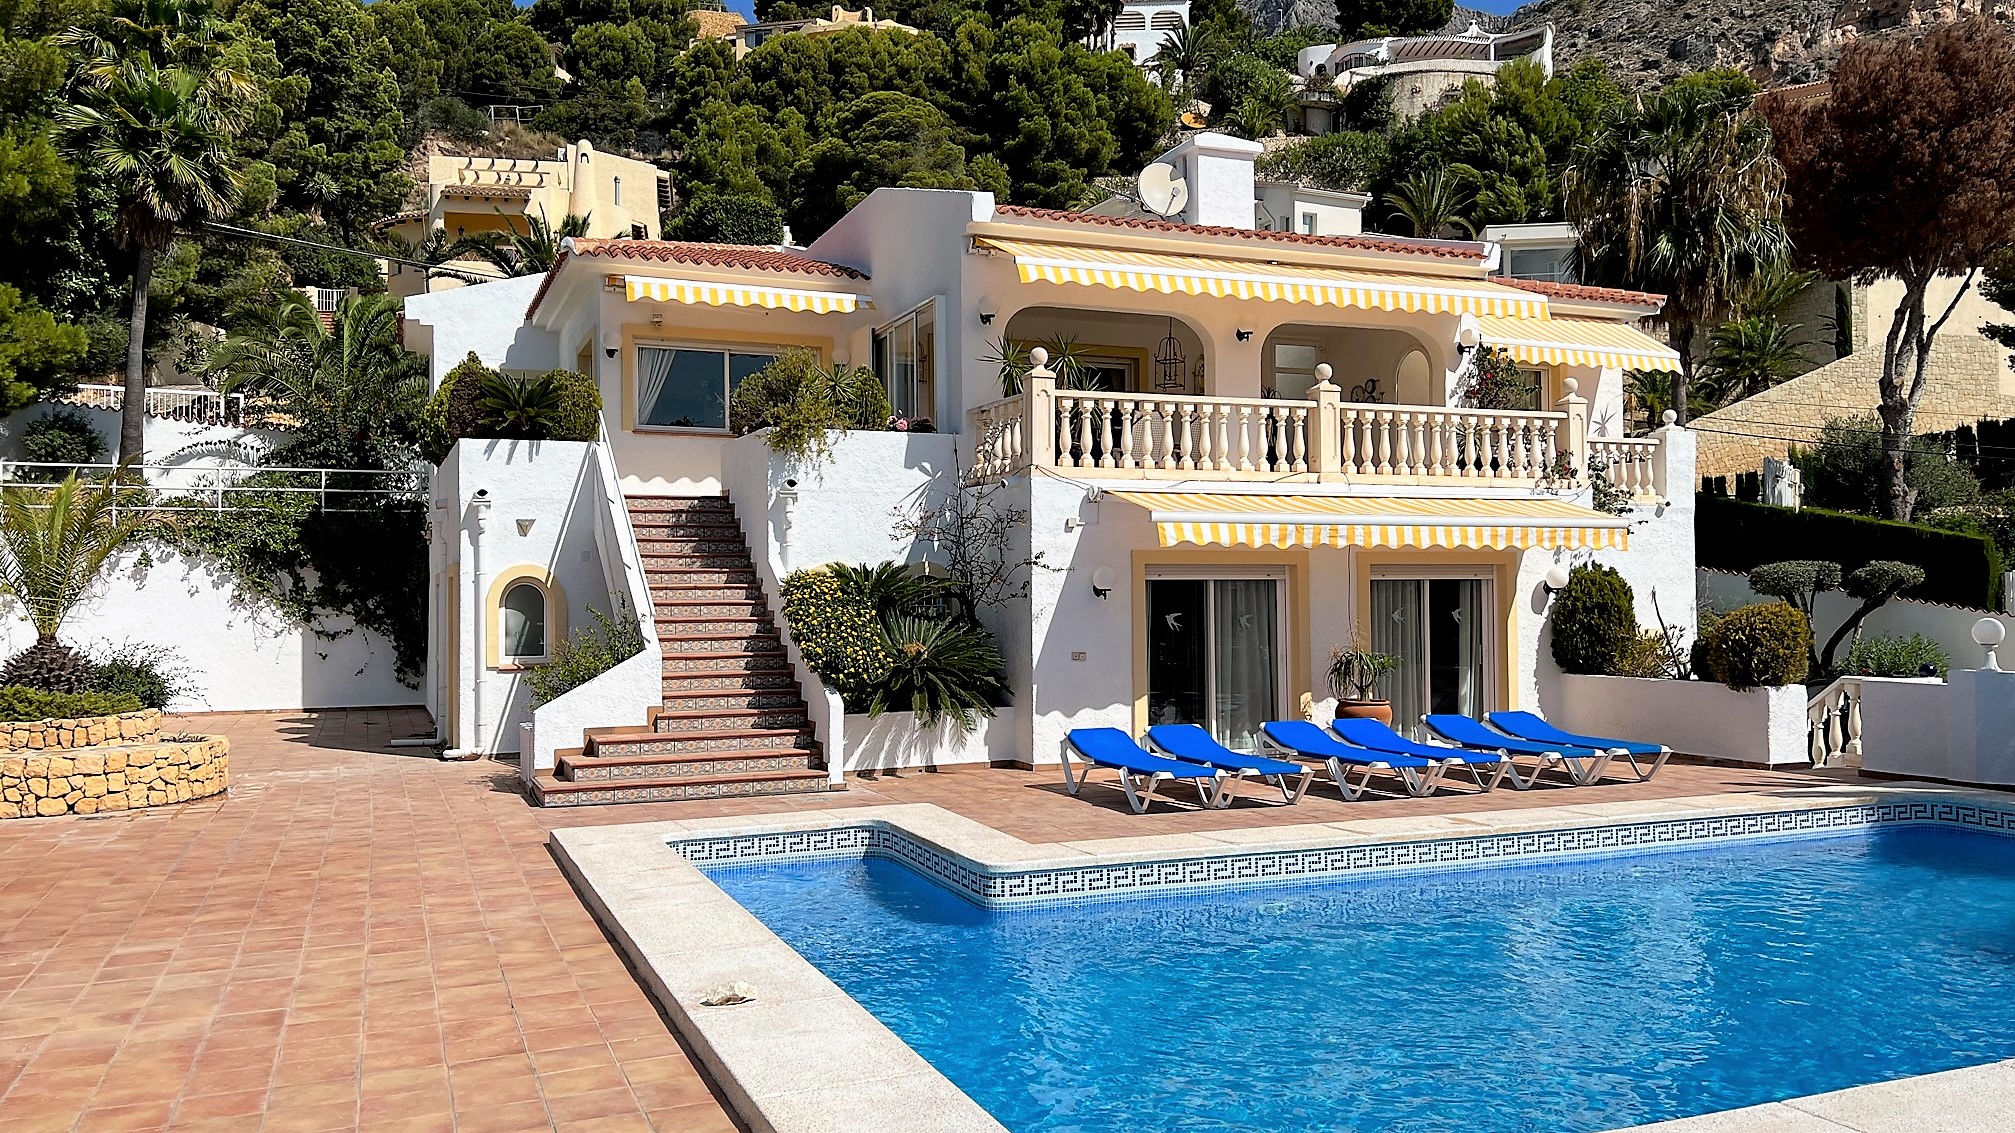 3 bed villa with beautiful sea views in Altea
dJ